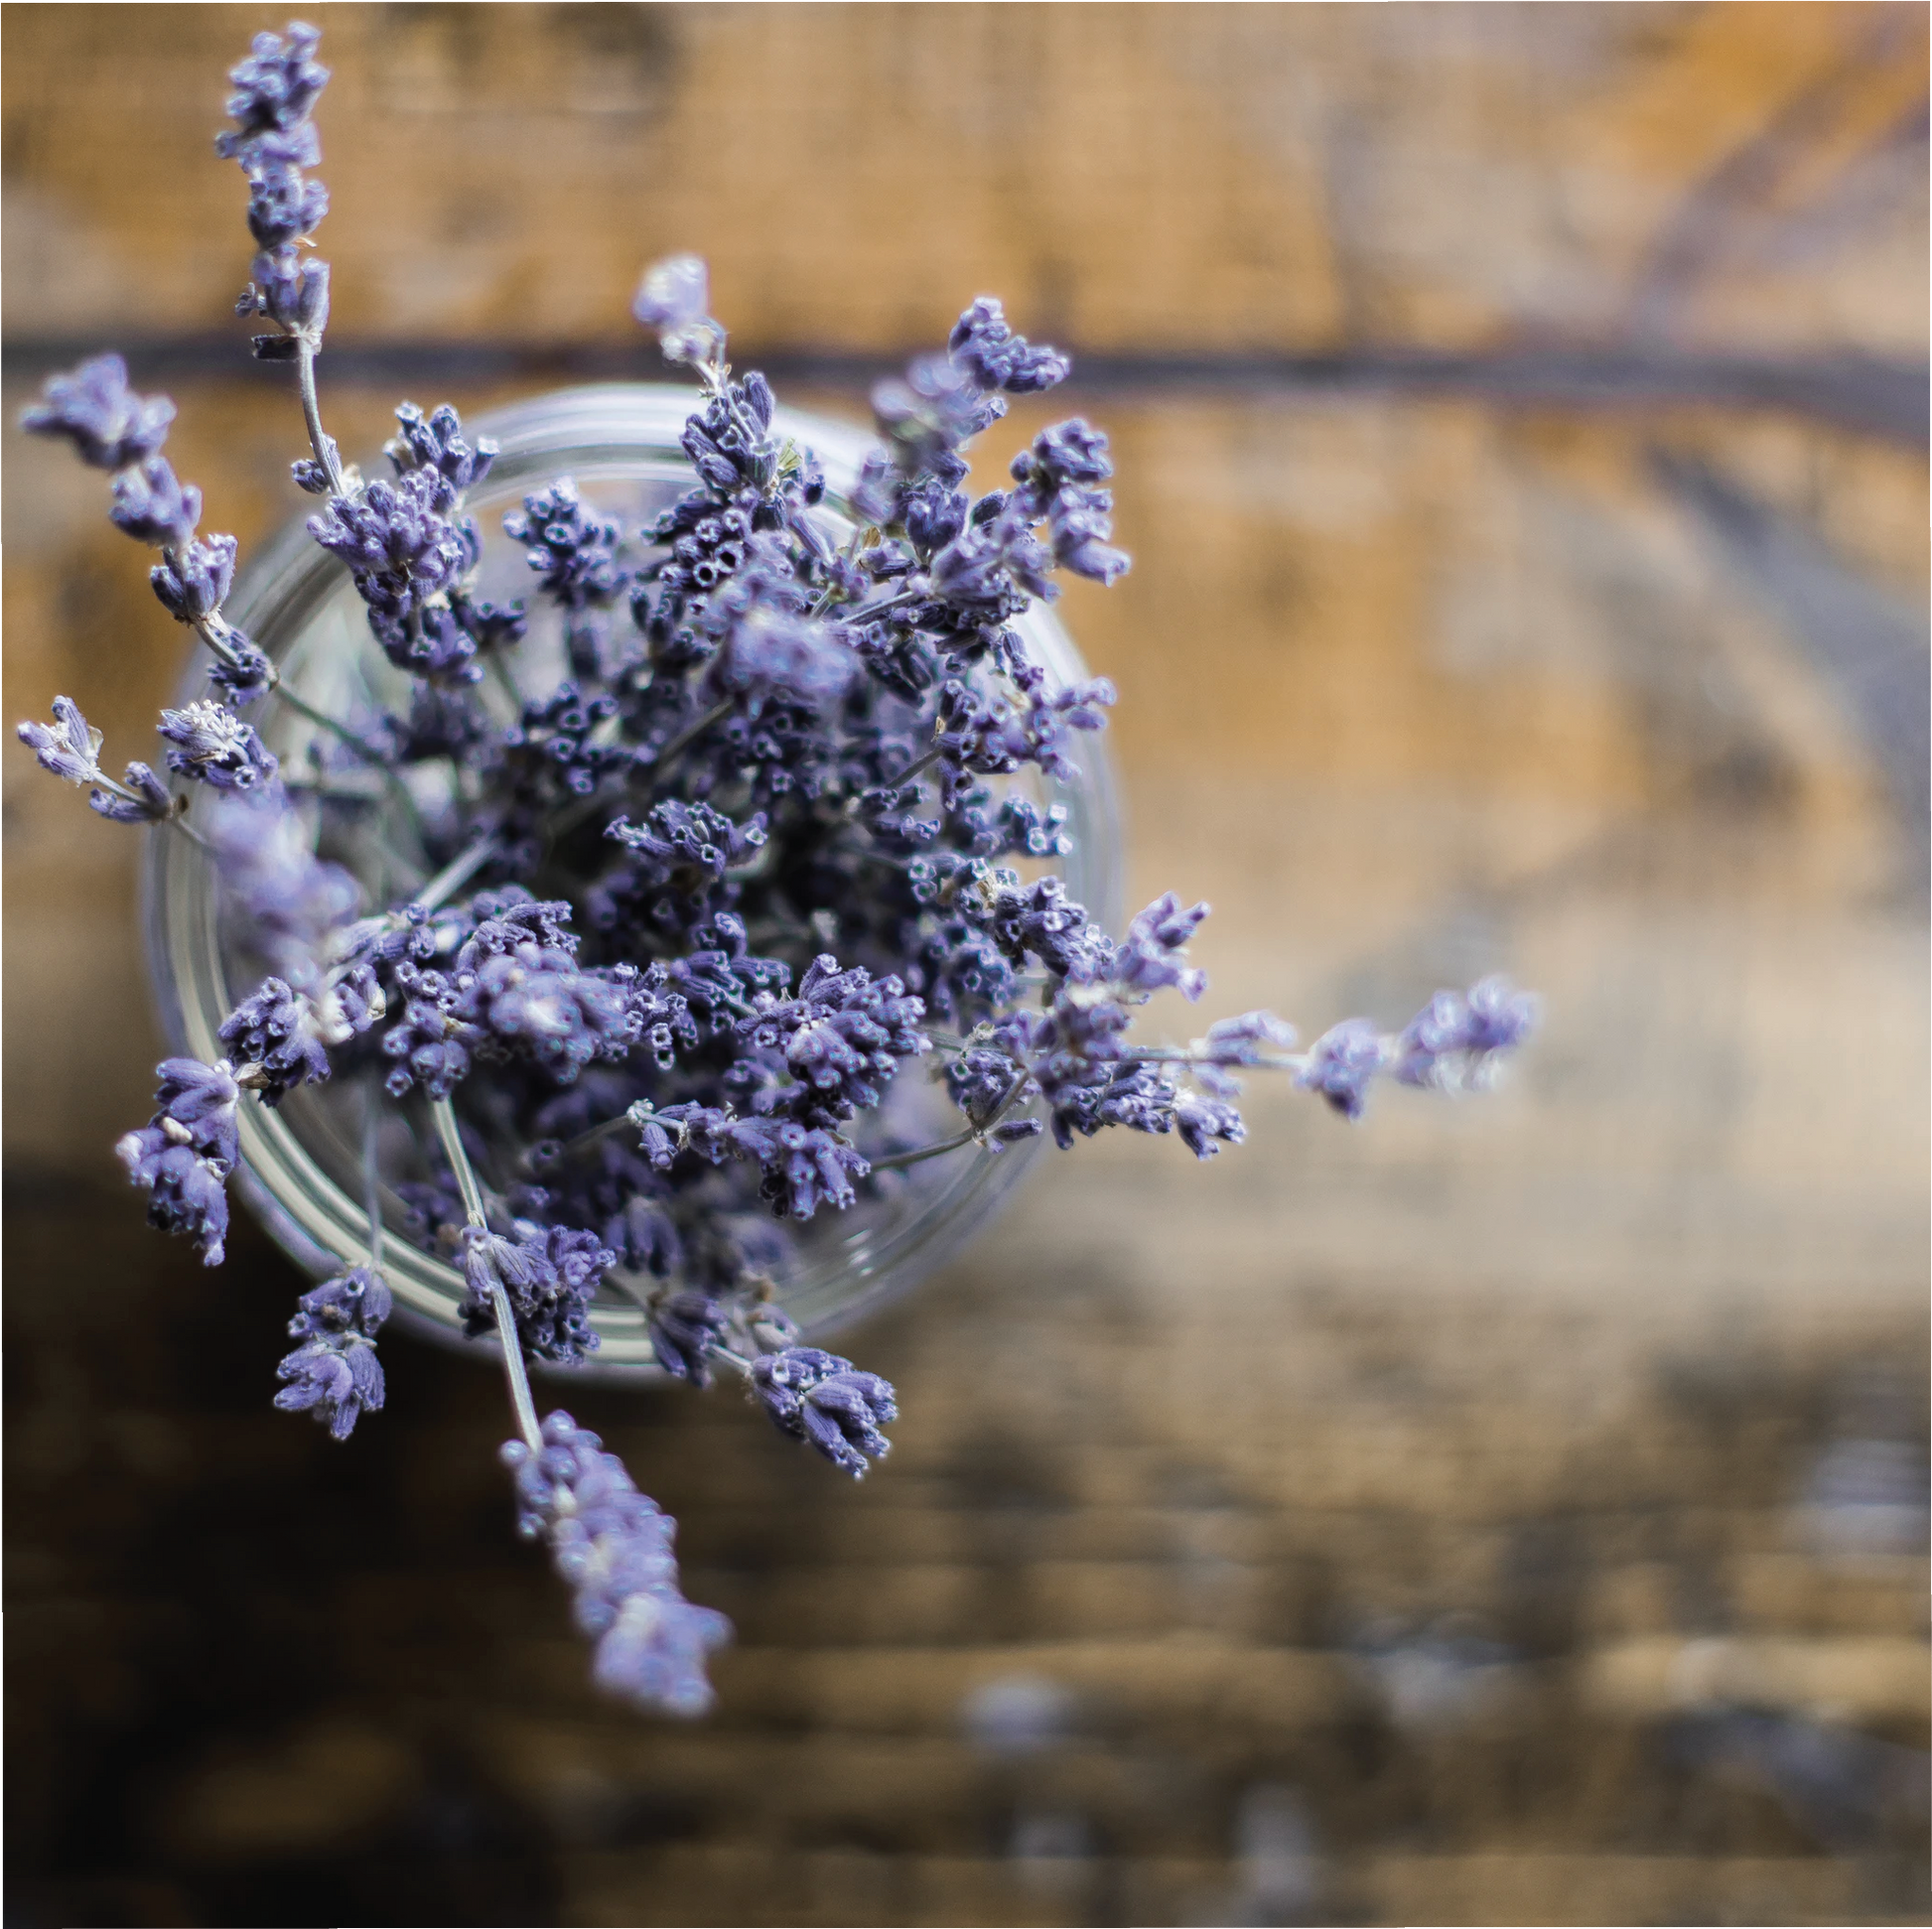 Lavender Cade Wood floral woody fragrance oil